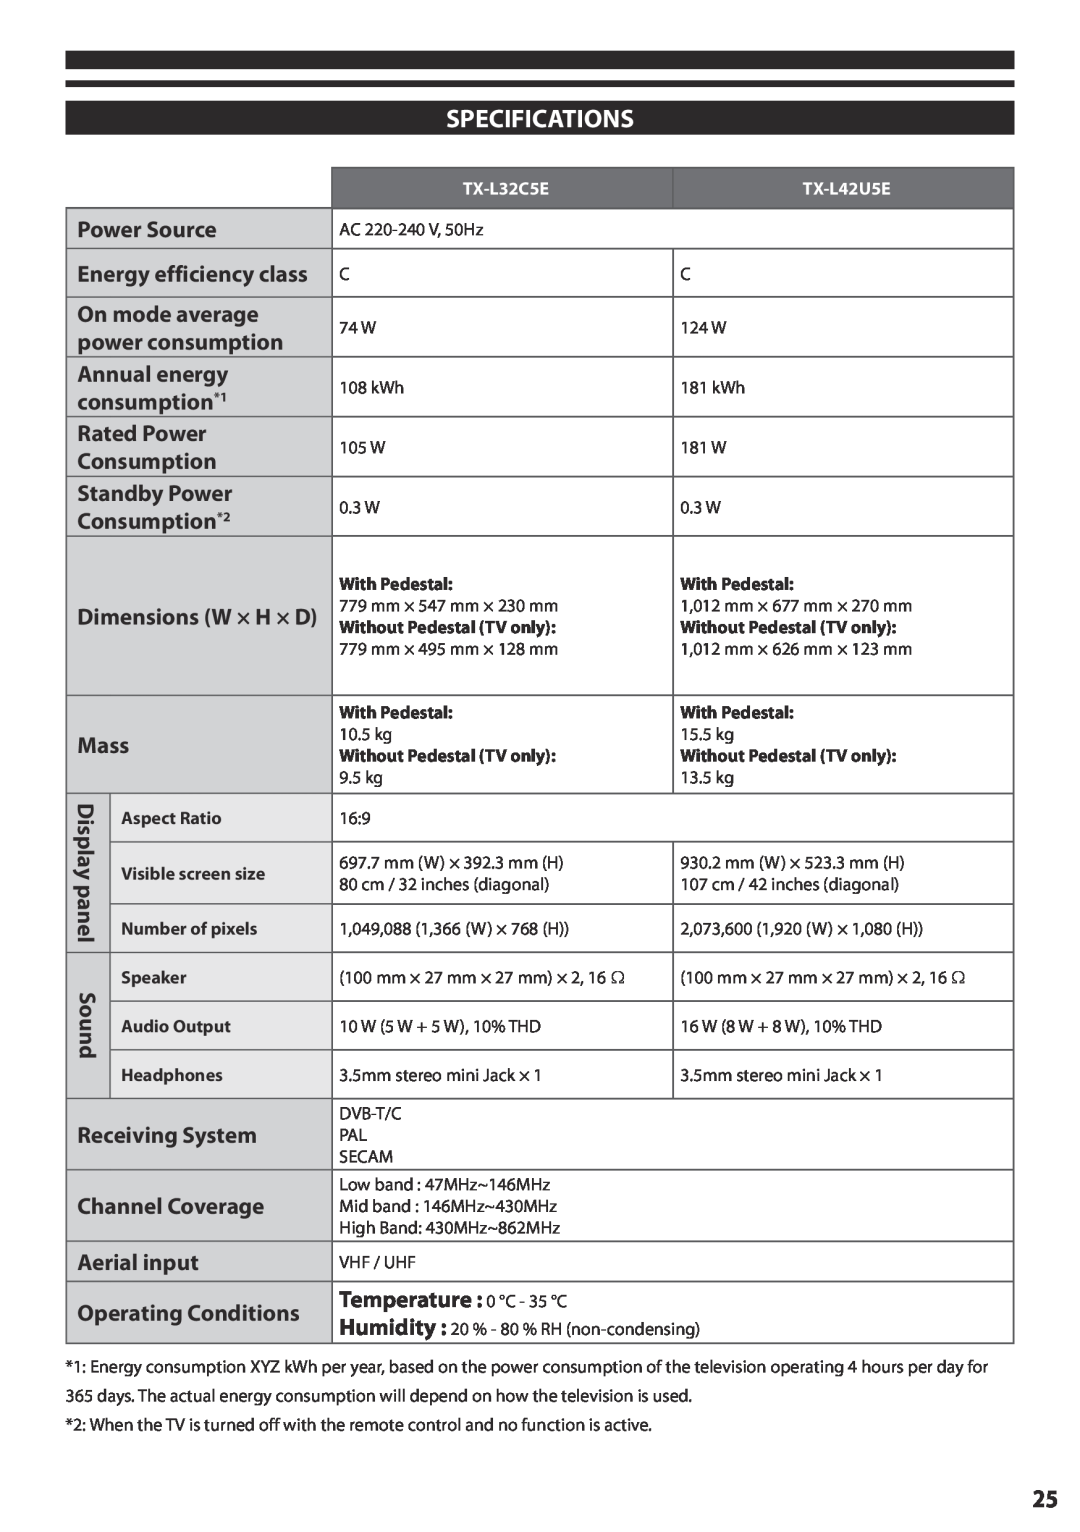 Panasonic TX-L32C5E Specifications, Power Source Energy efficiency class, Consumption*2 Dimensions W × H × D Mass, panel 